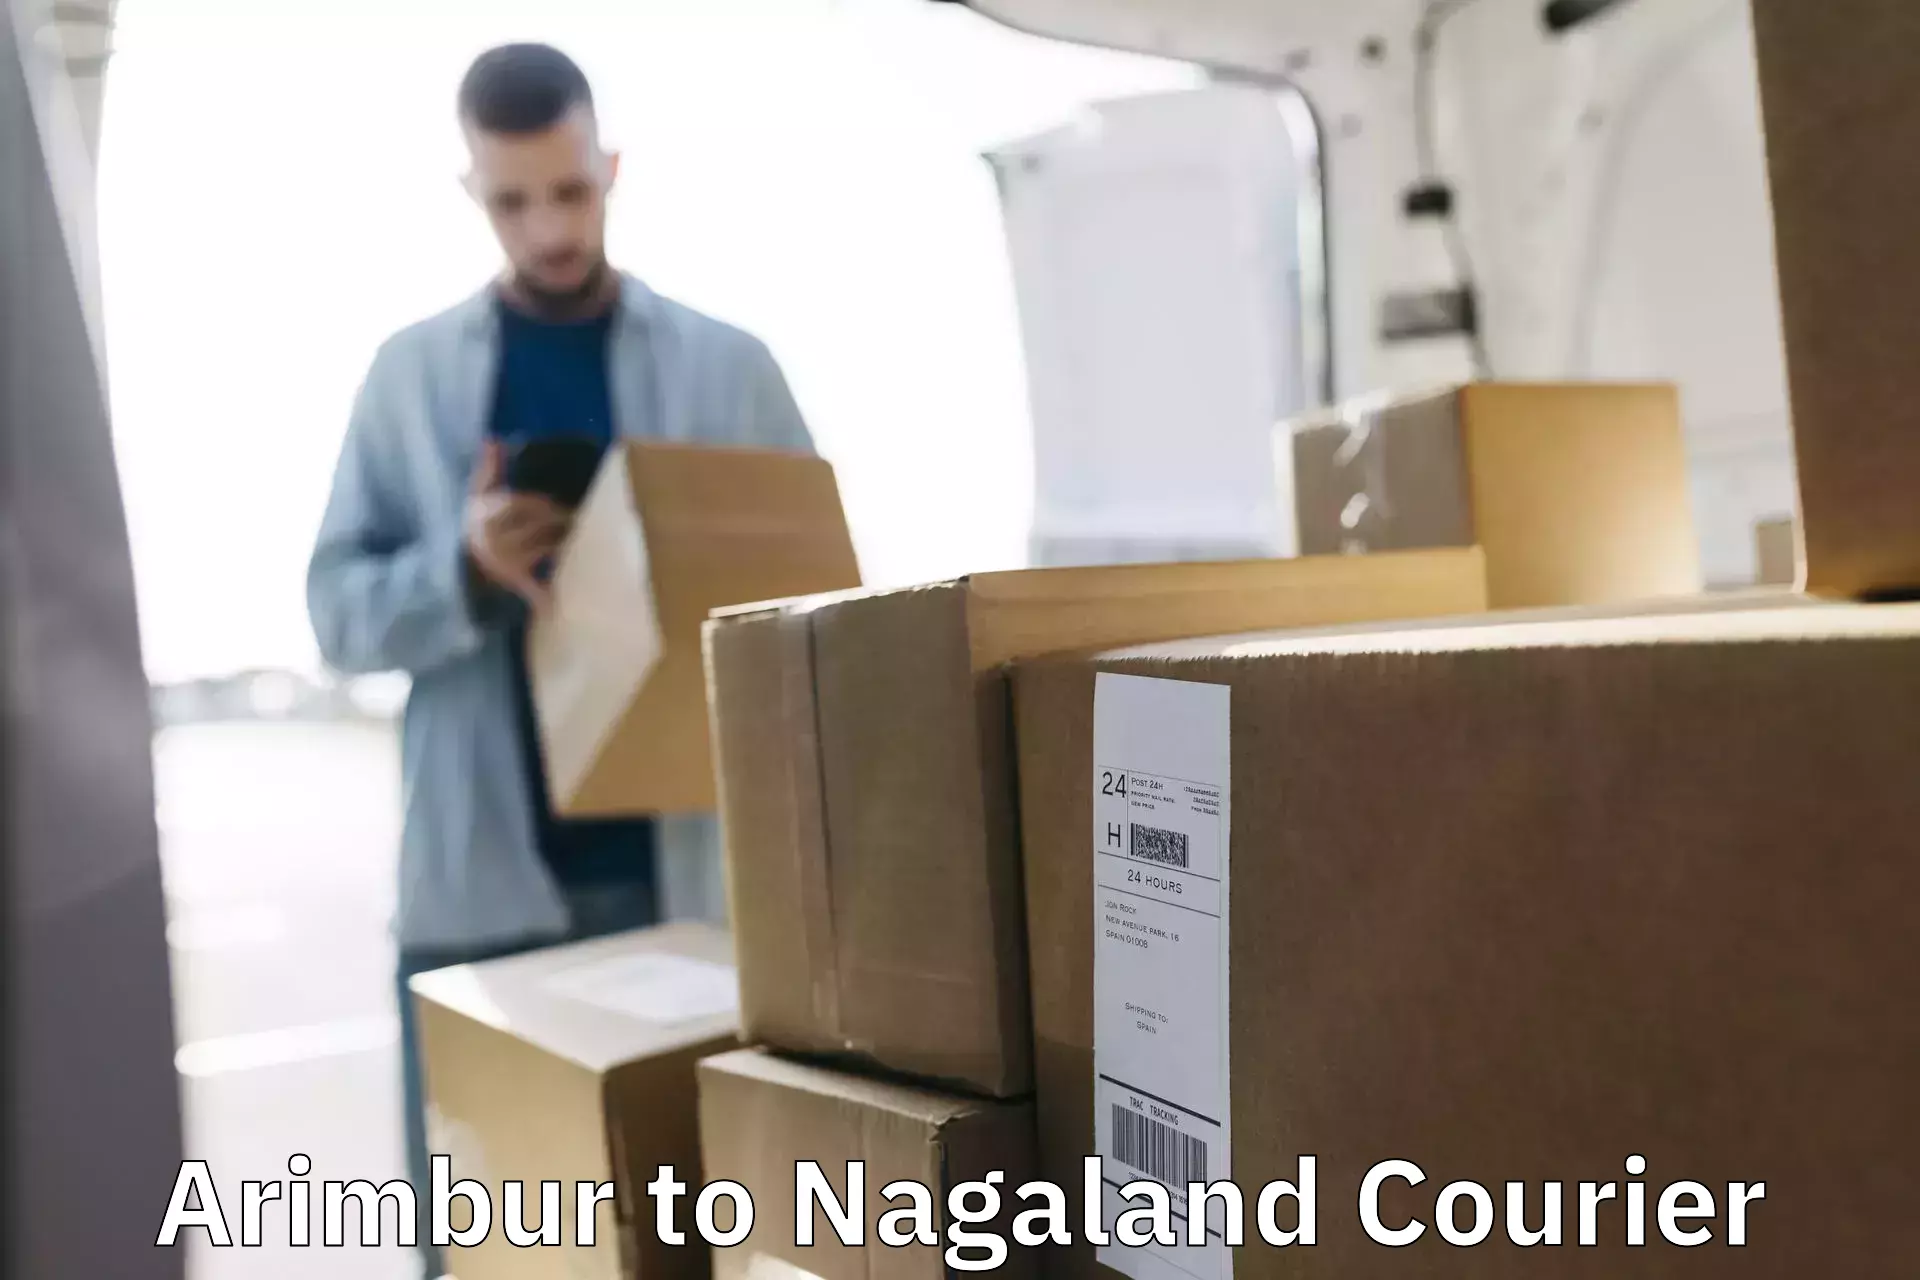 Easy return solutions Arimbur to Nagaland